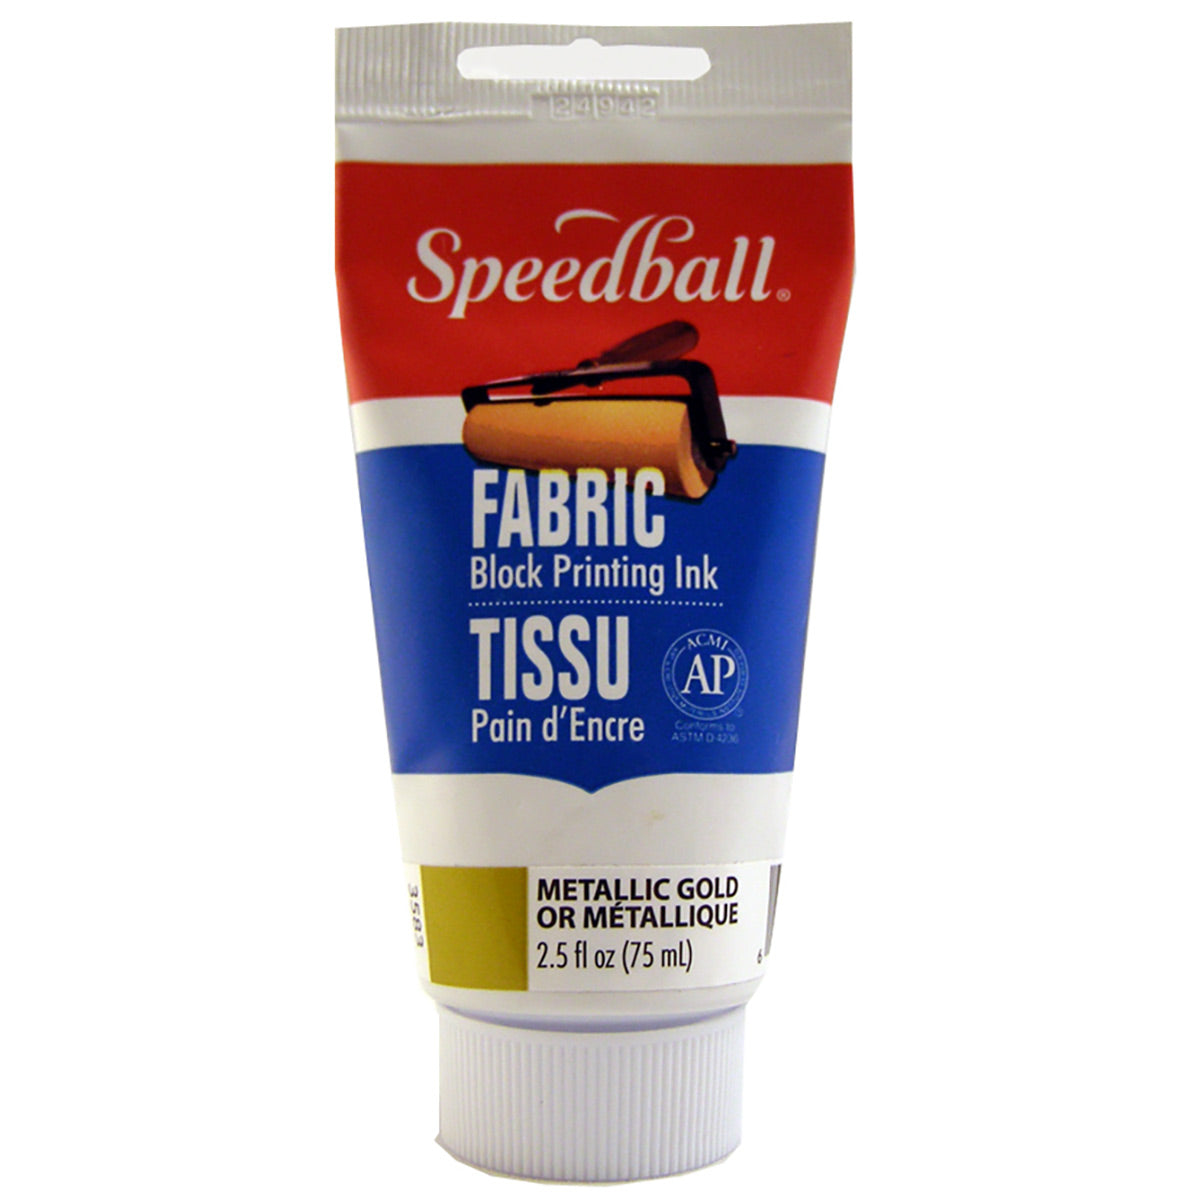 Speedball - Fabric Block Printing Ink 75ml (2,5 oz) - Metallic Gold